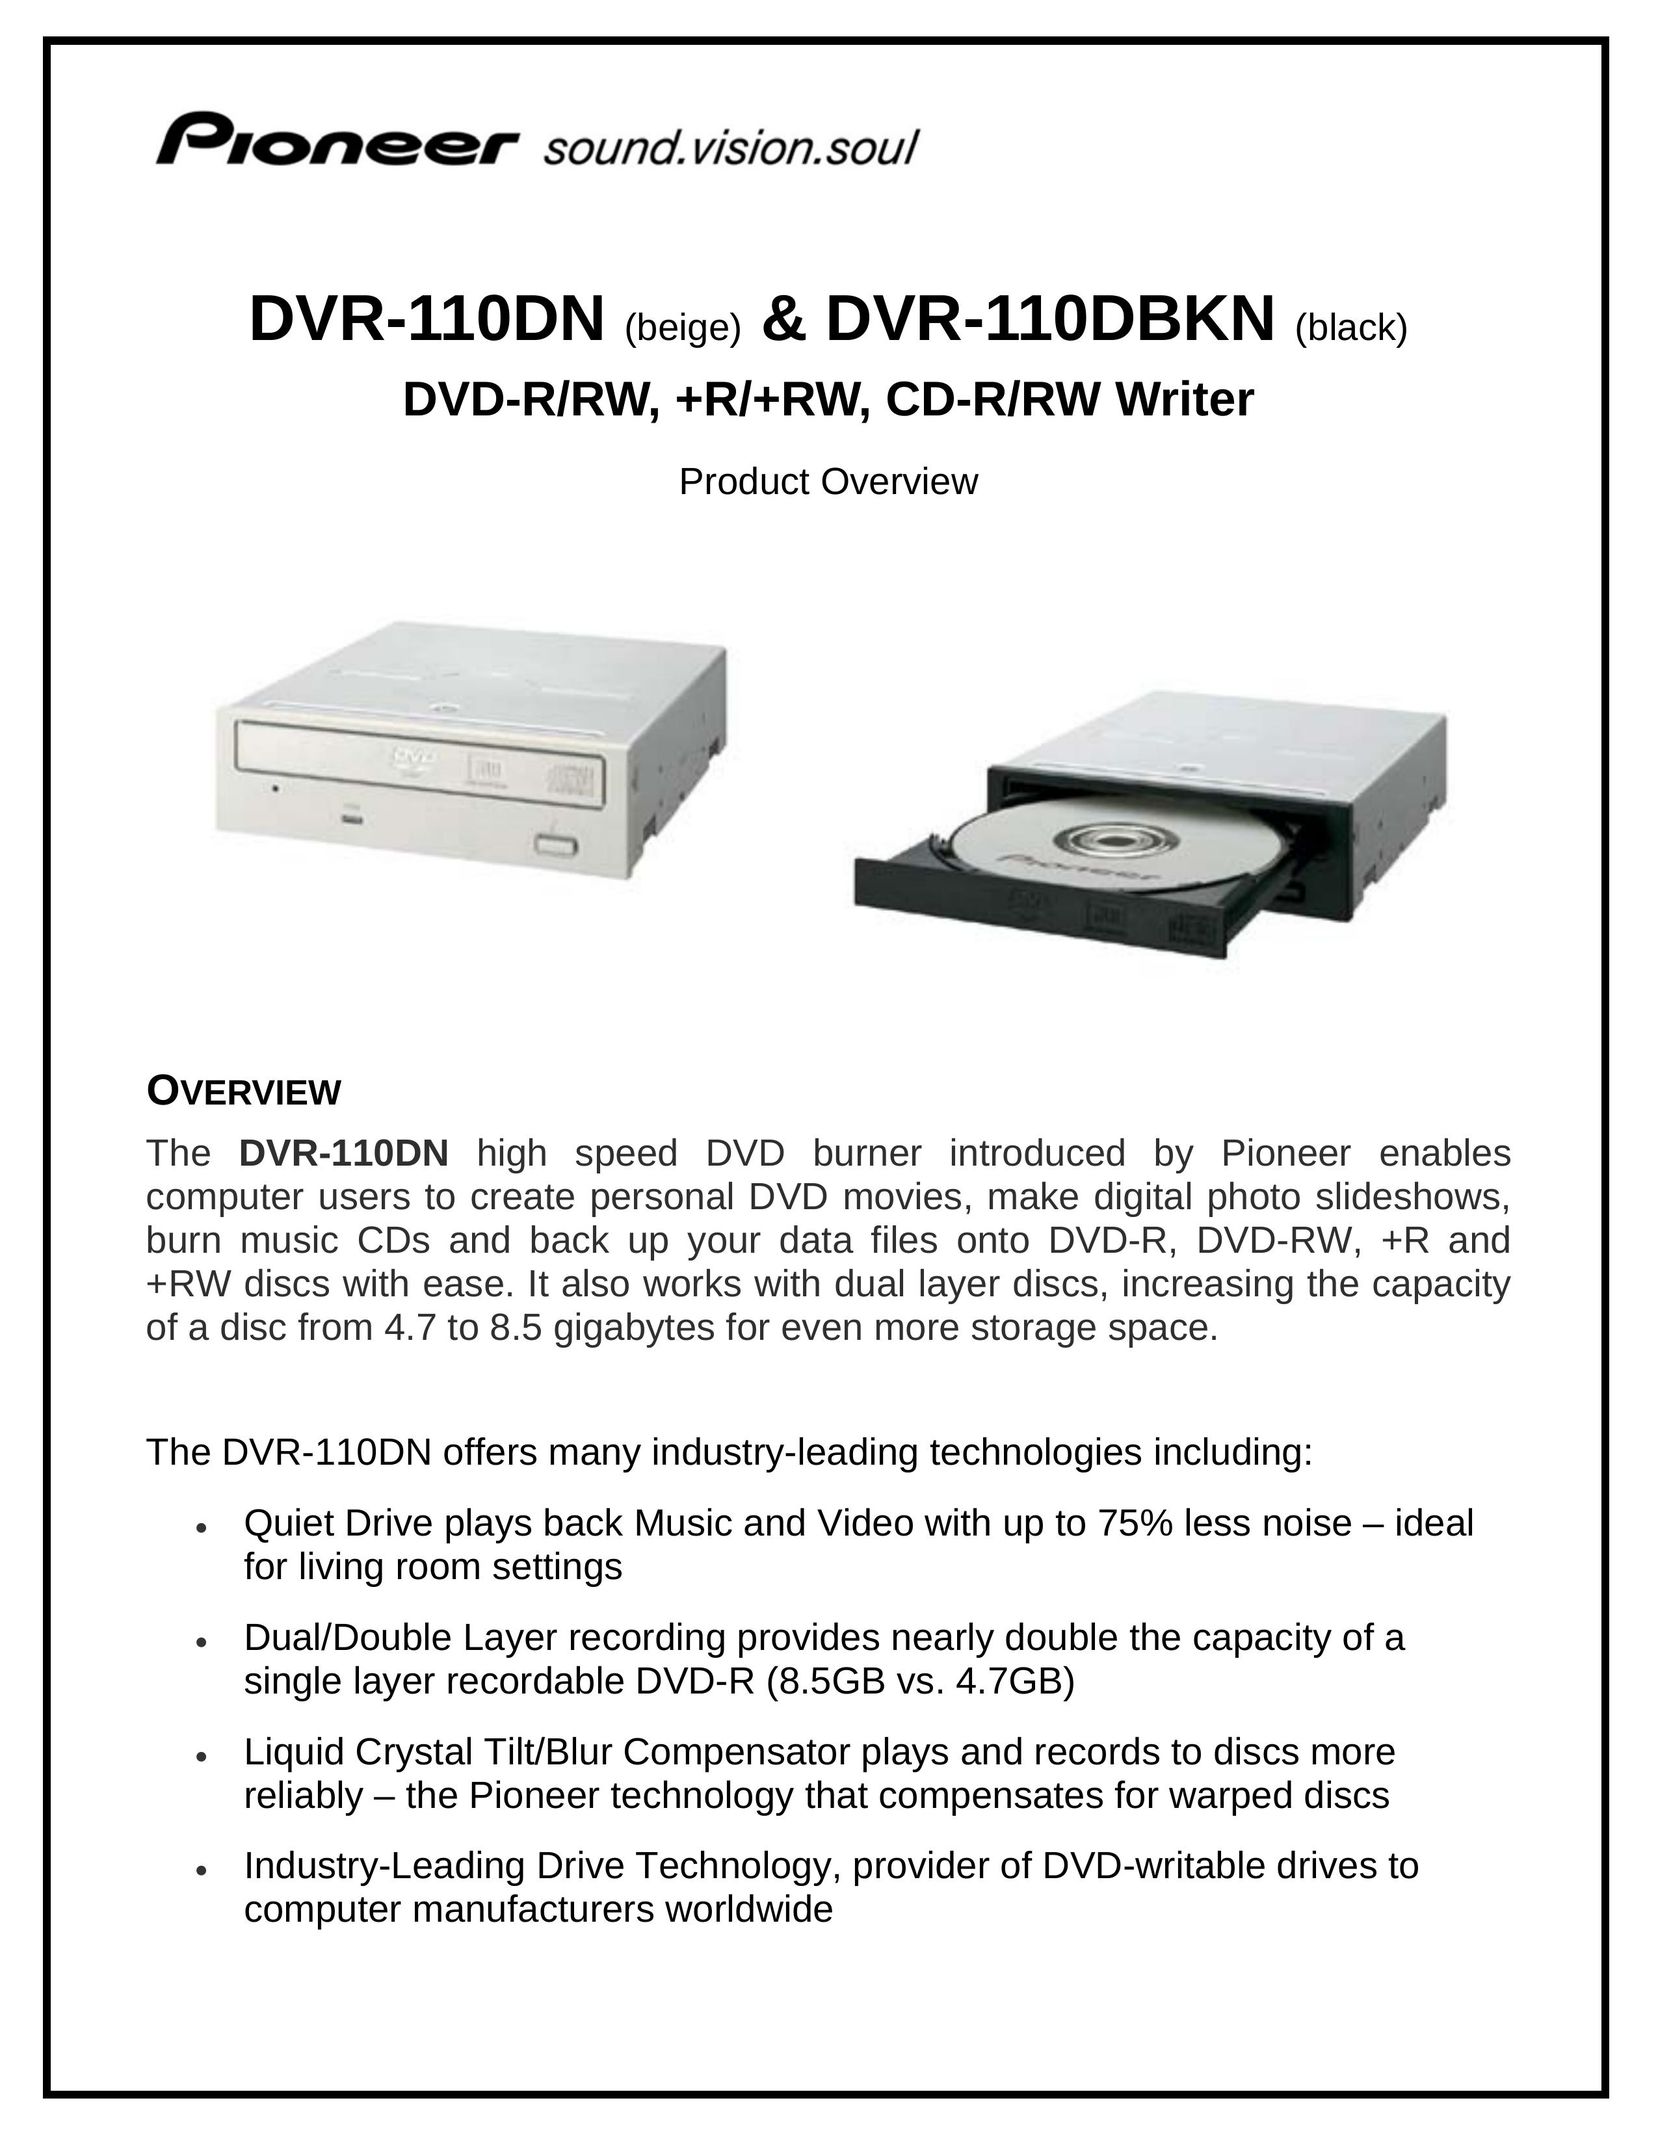 Pioneer DVR-110DBKN Computer Drive User Manual (Page 1)